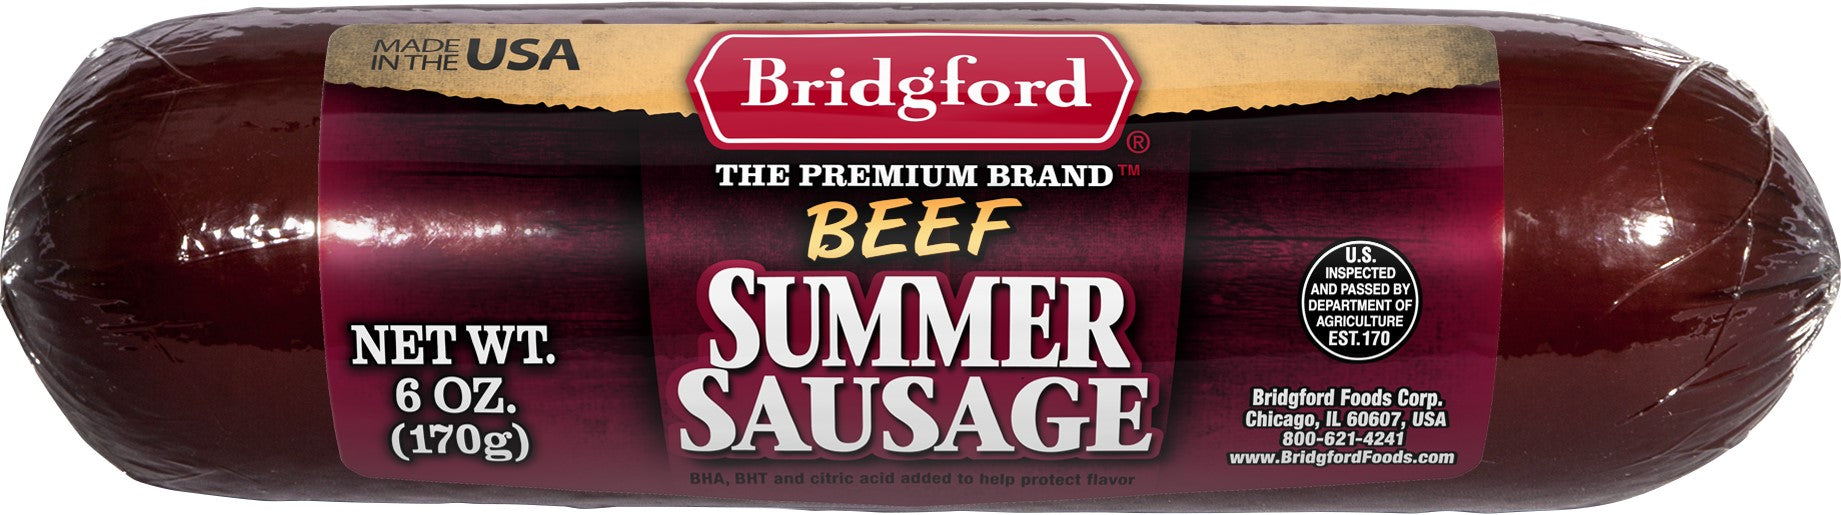 Bridgford Beef Summer Sausage 6 oz